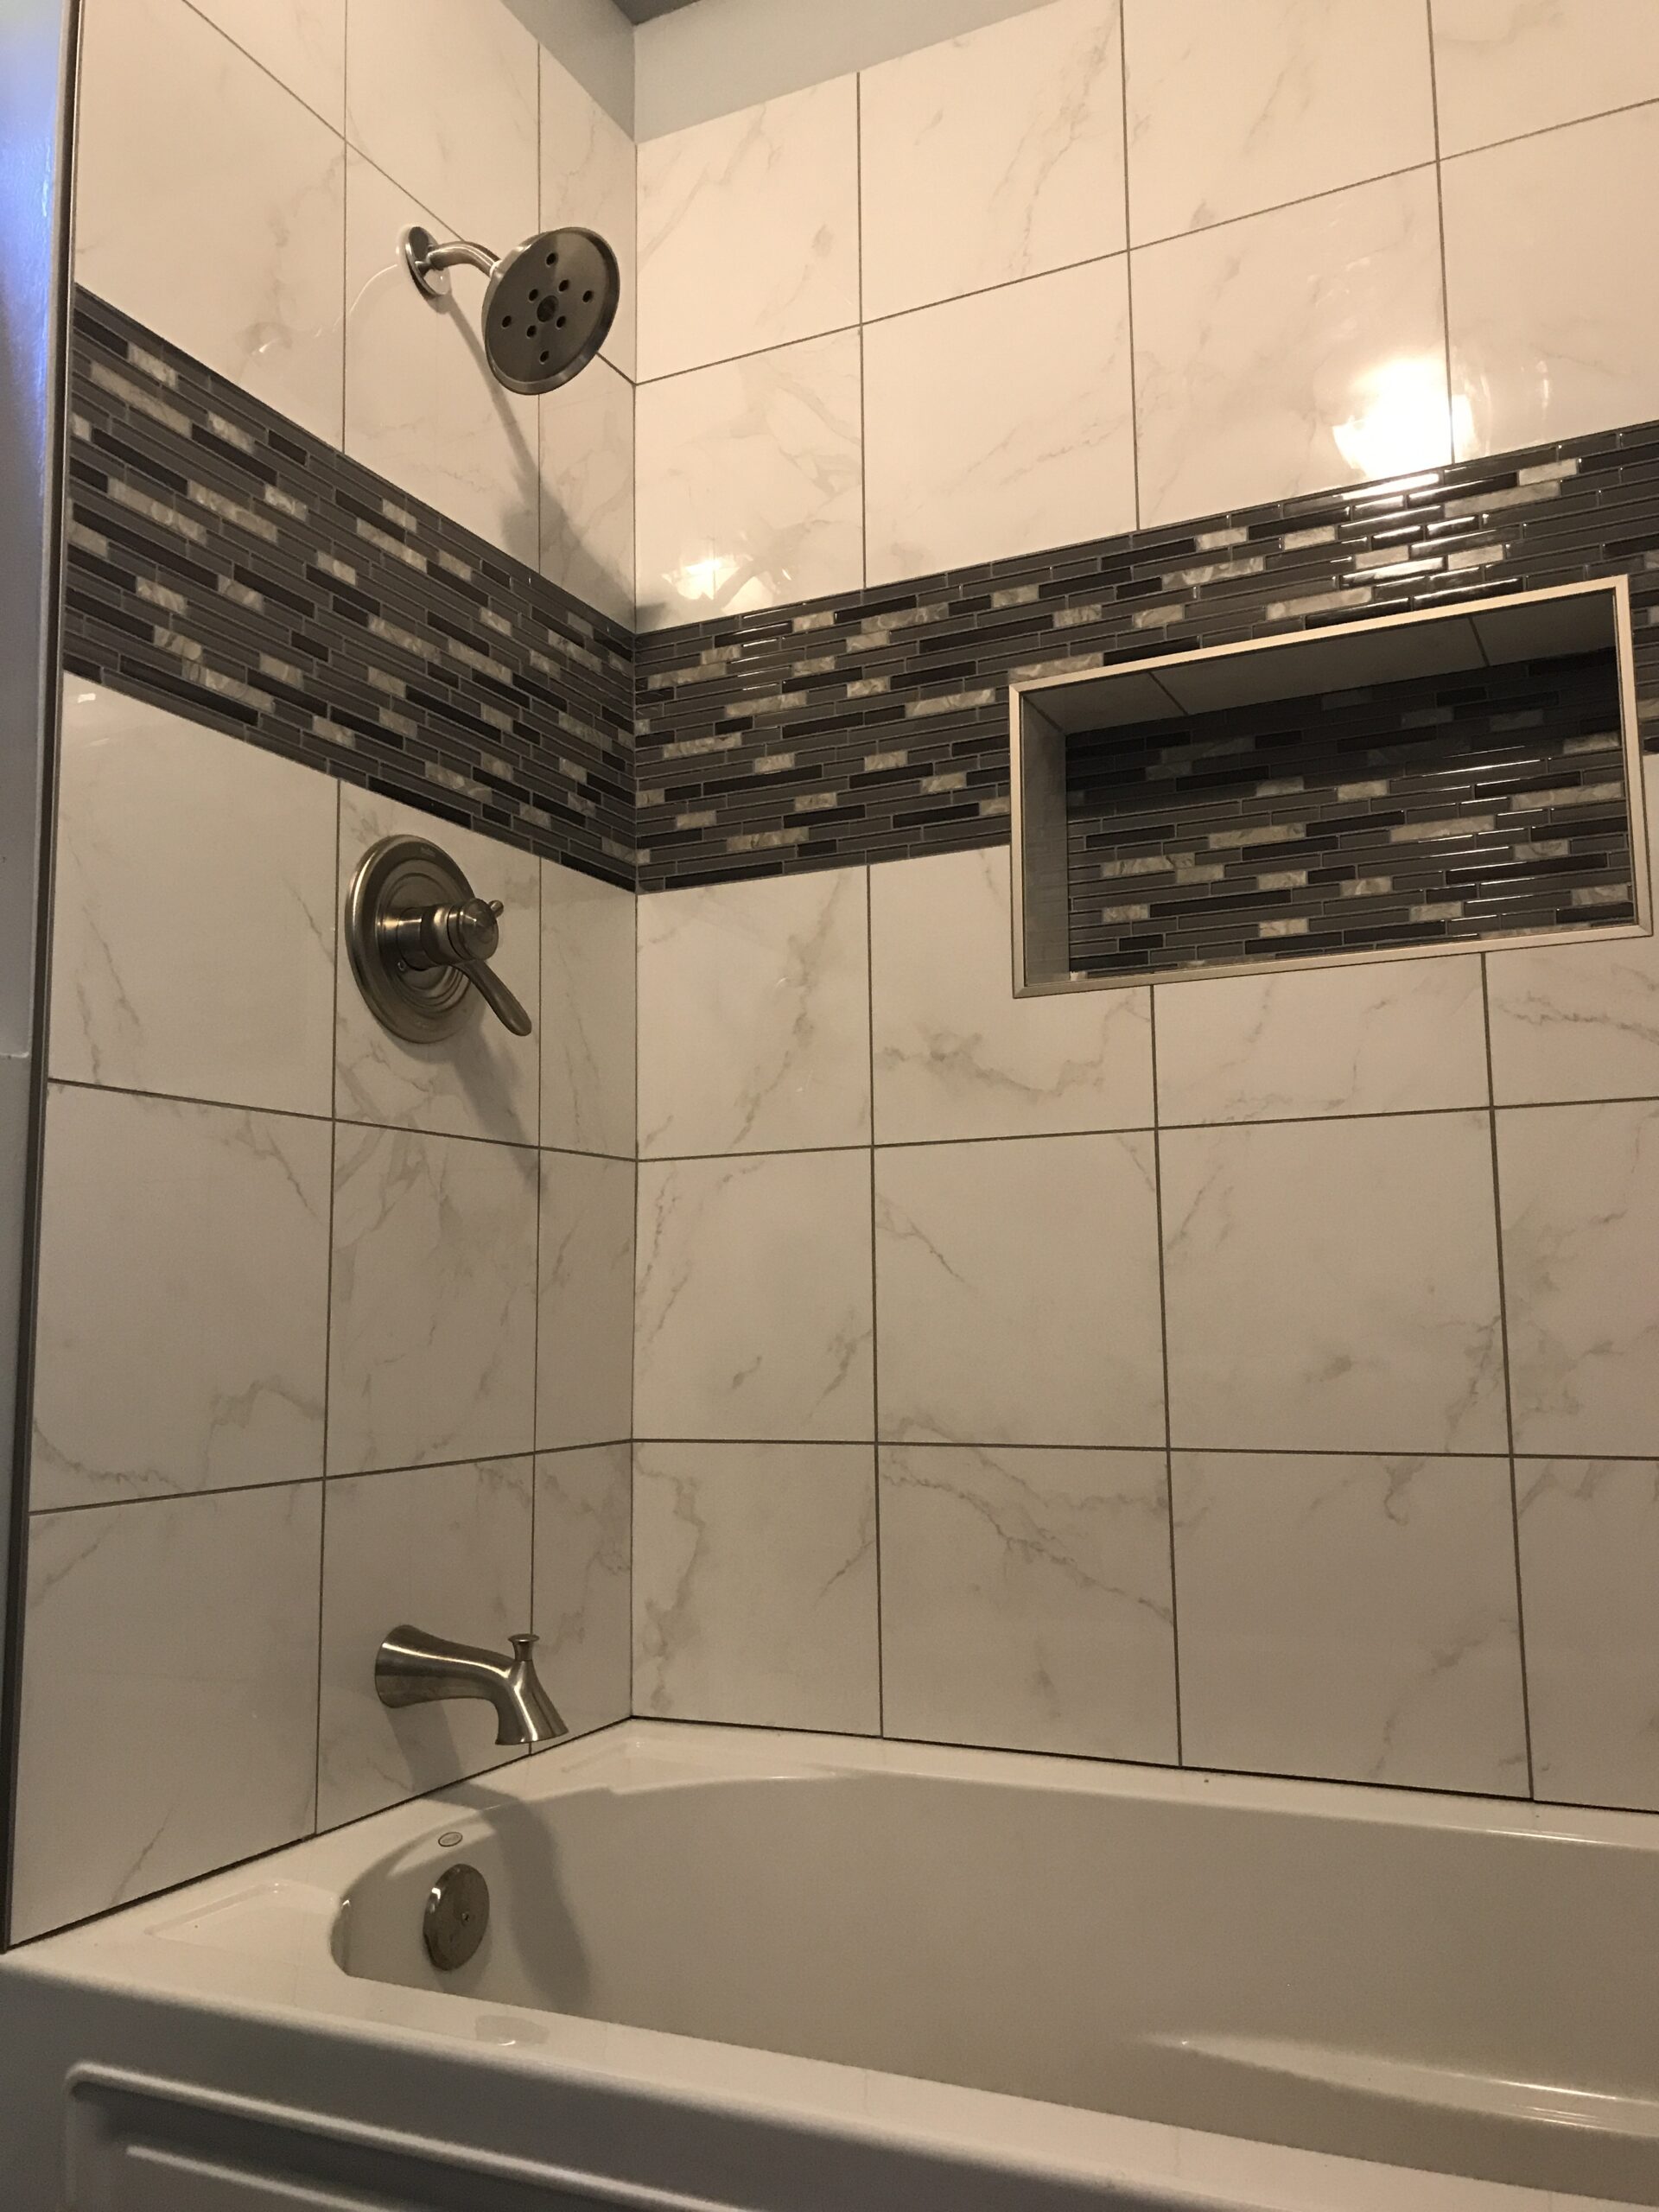  Bathroom Remodel - Tile Work 